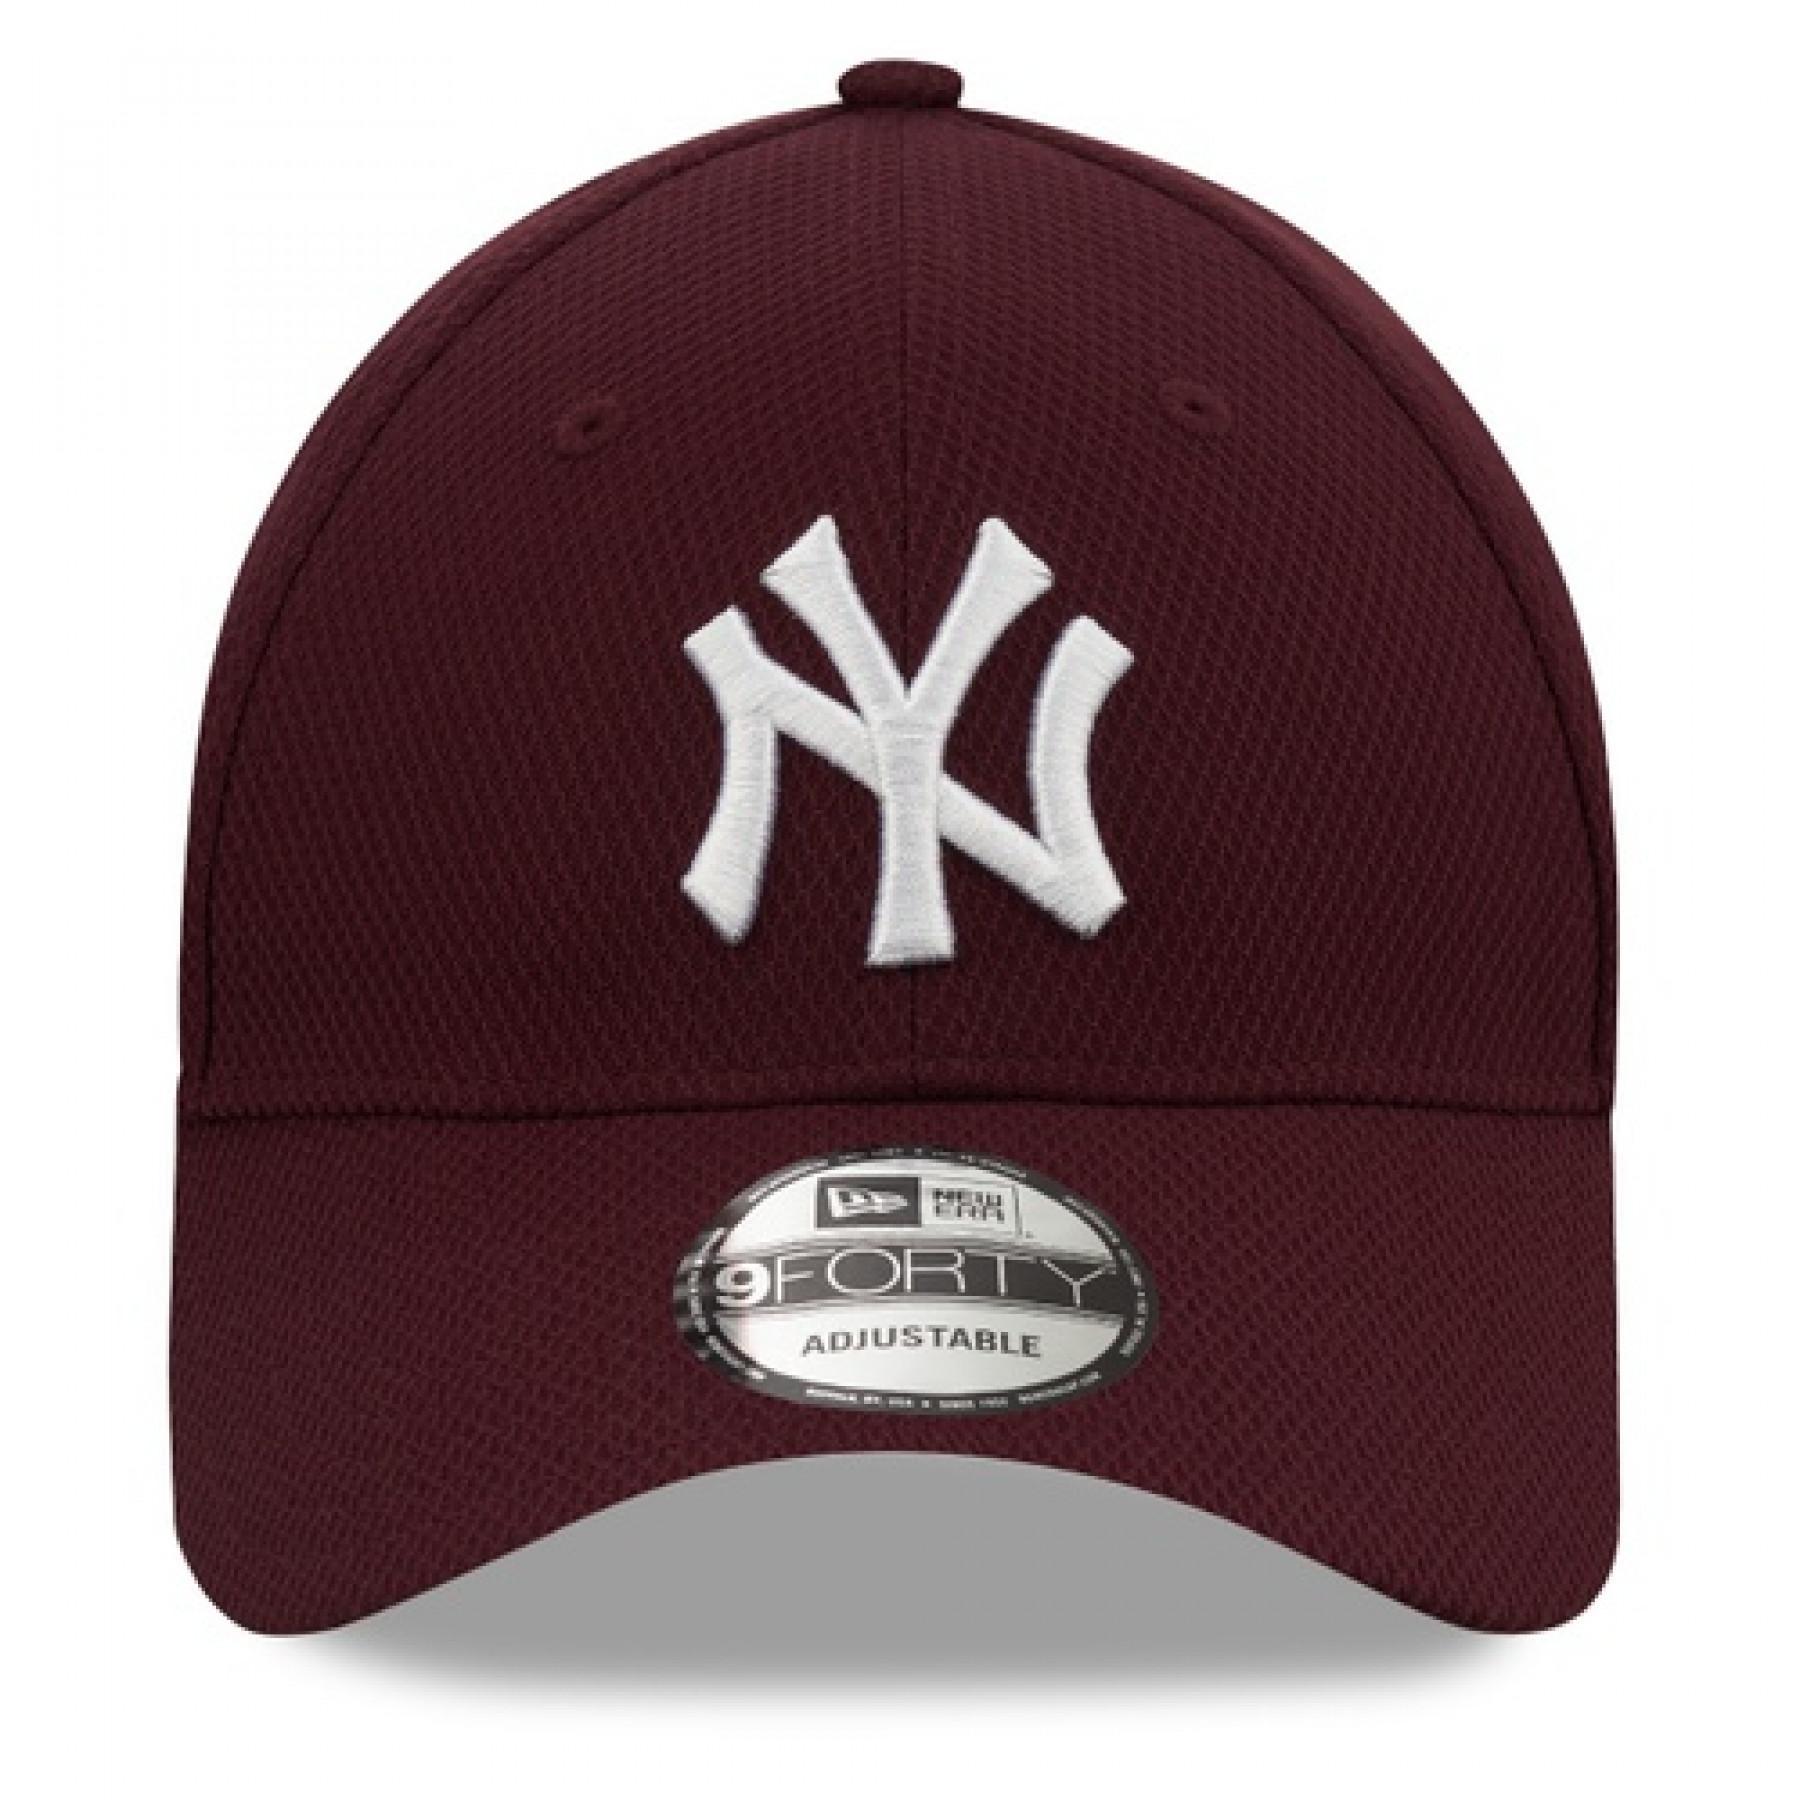 Kapsyl New Era Diamond Era 9forty New York Yankees Mrnwhi